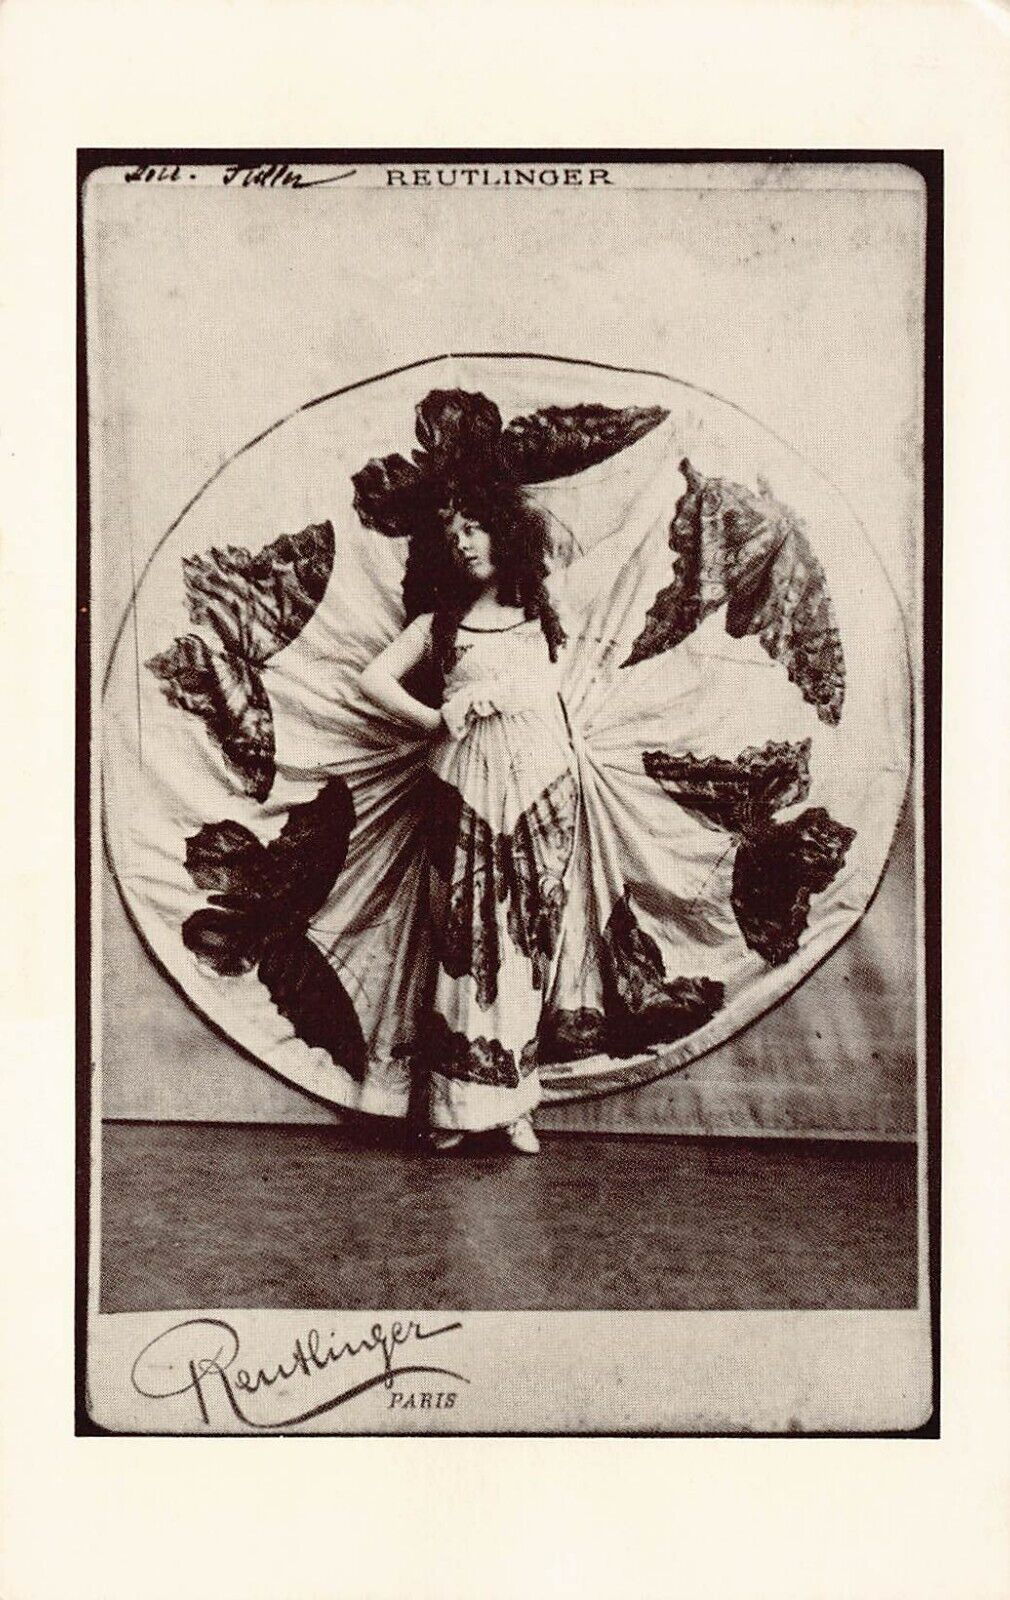 Paris France Reutlinger Loie Fuller Skirt Serpentine Dance Museum Postcard Q9